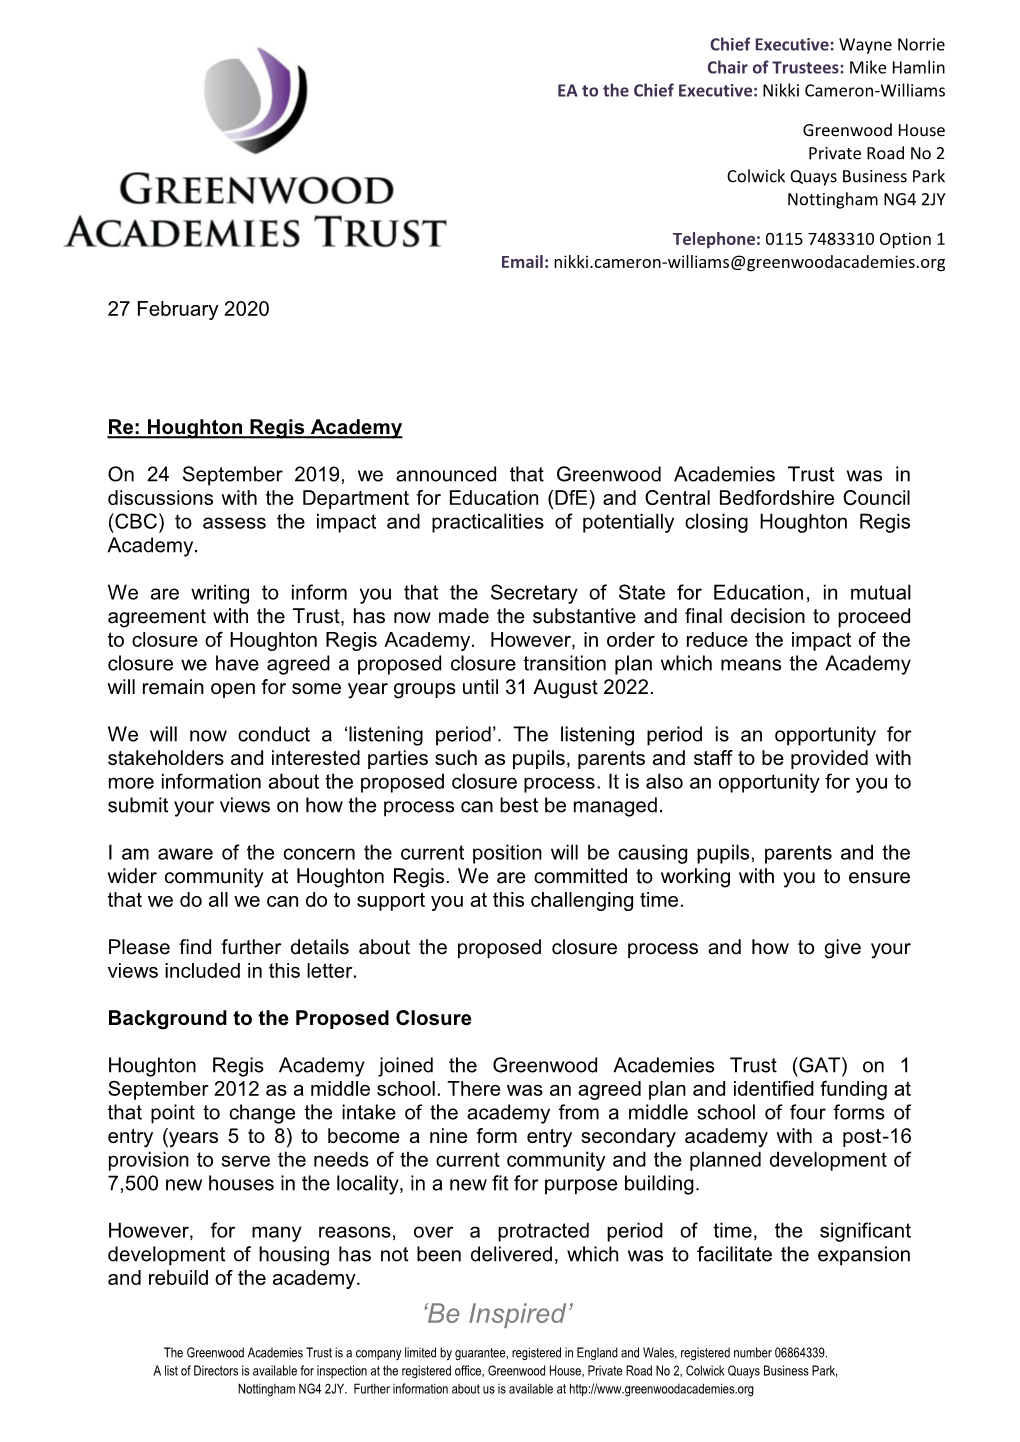 The Nottingham Academy